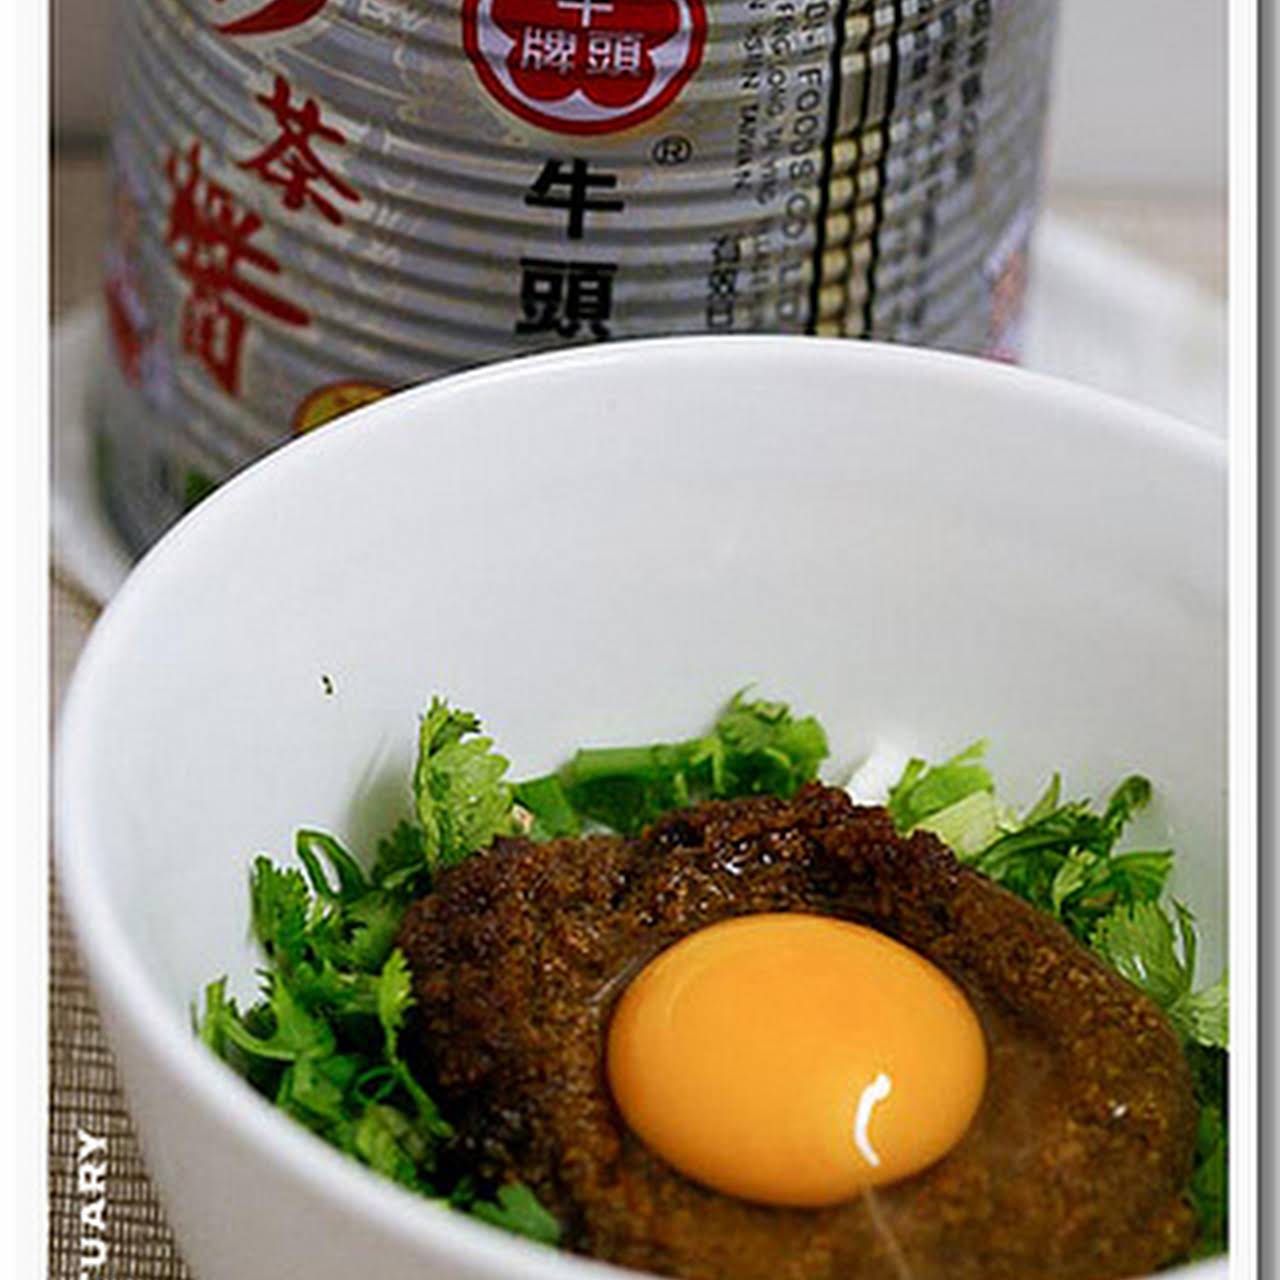 Sichuan Hotpot – spicy hotpot broth